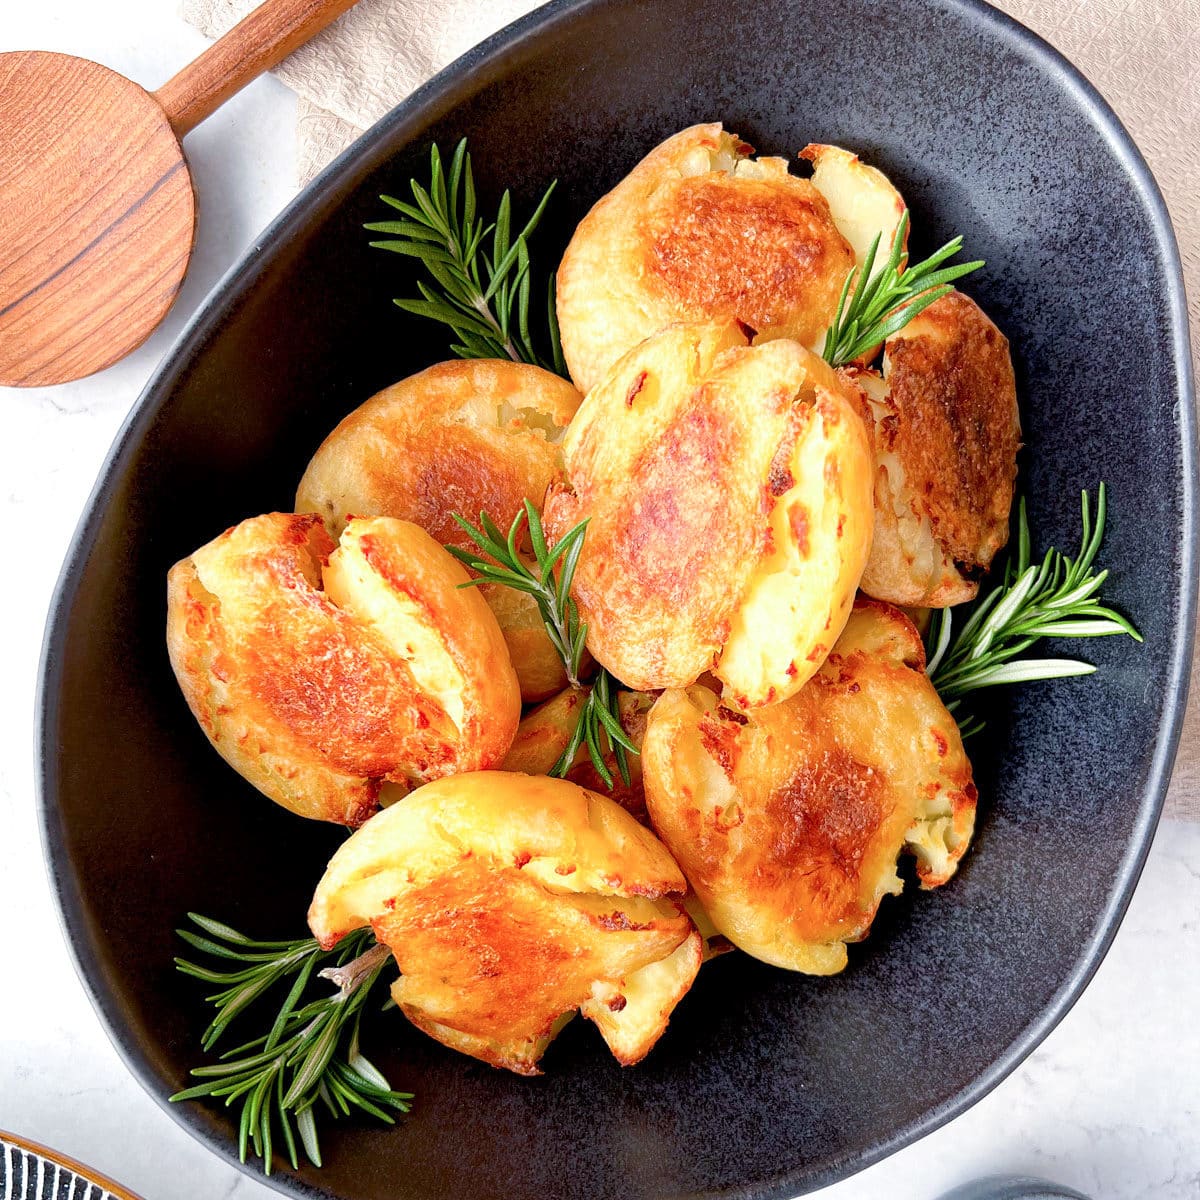 Crispy Golden Smashed Potatoes Recipe — Be Greedy Eats